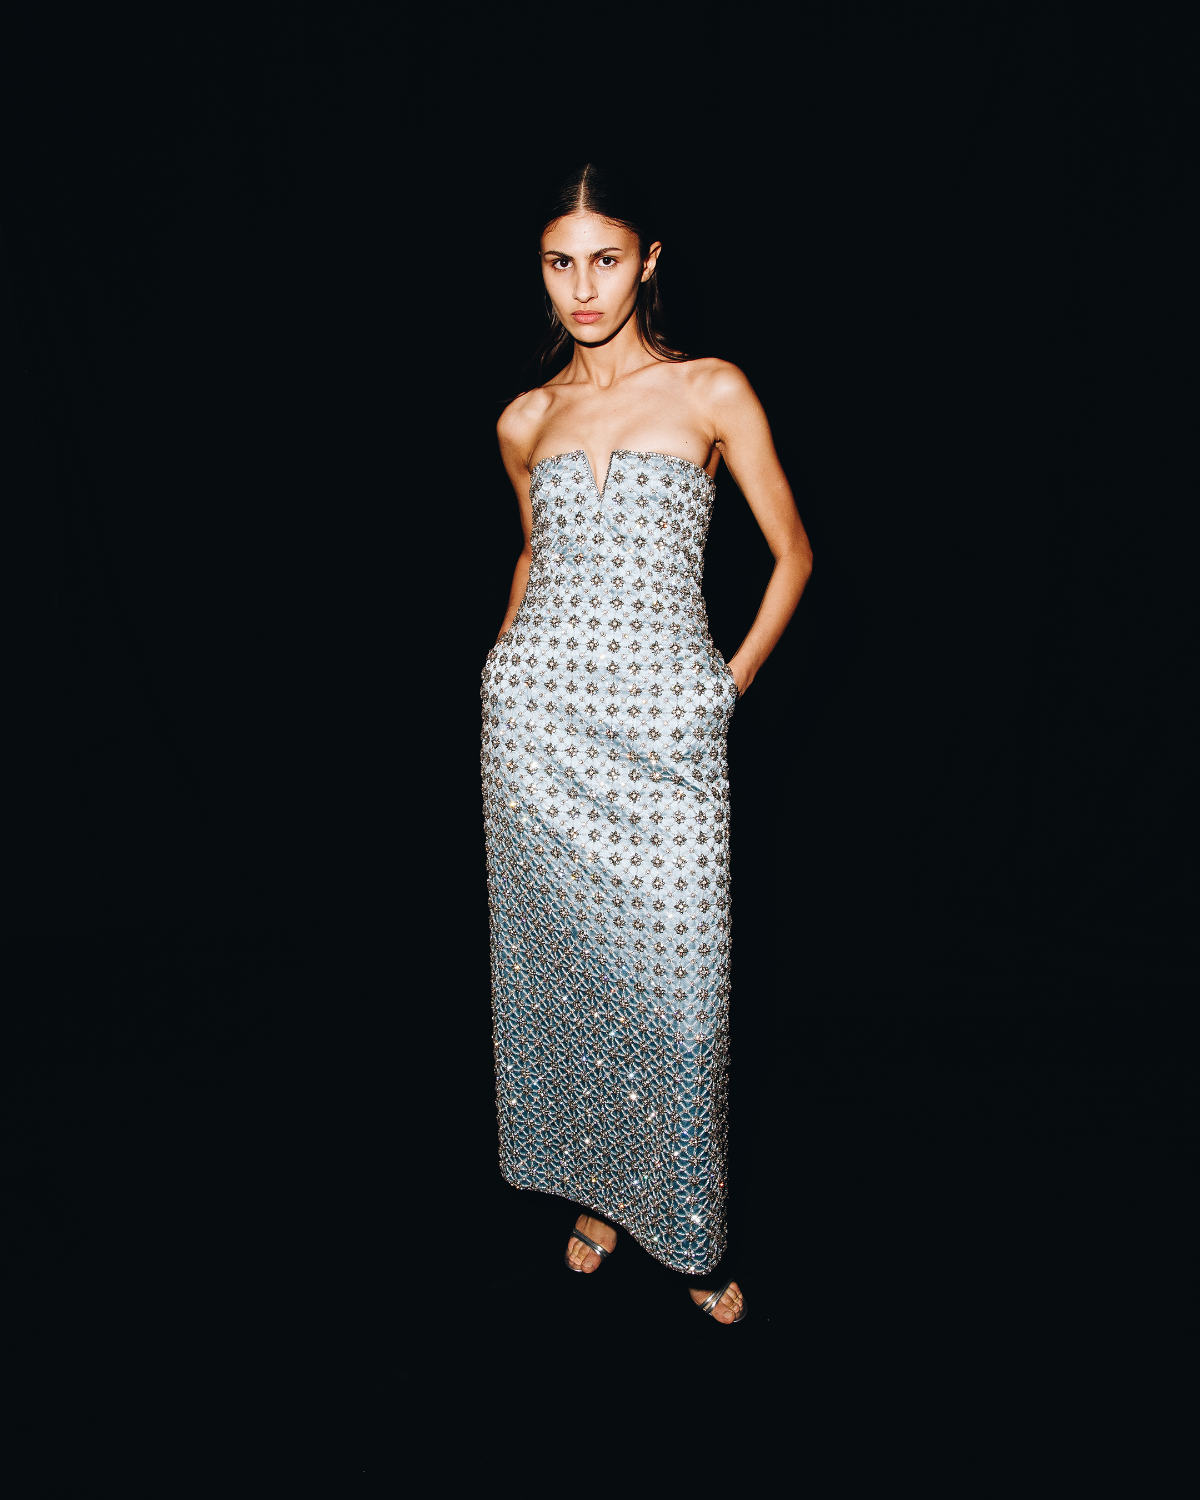 Gucci Presents Ancora Notte, The First Eveningwear Collection Designed By Sabato De Sarno